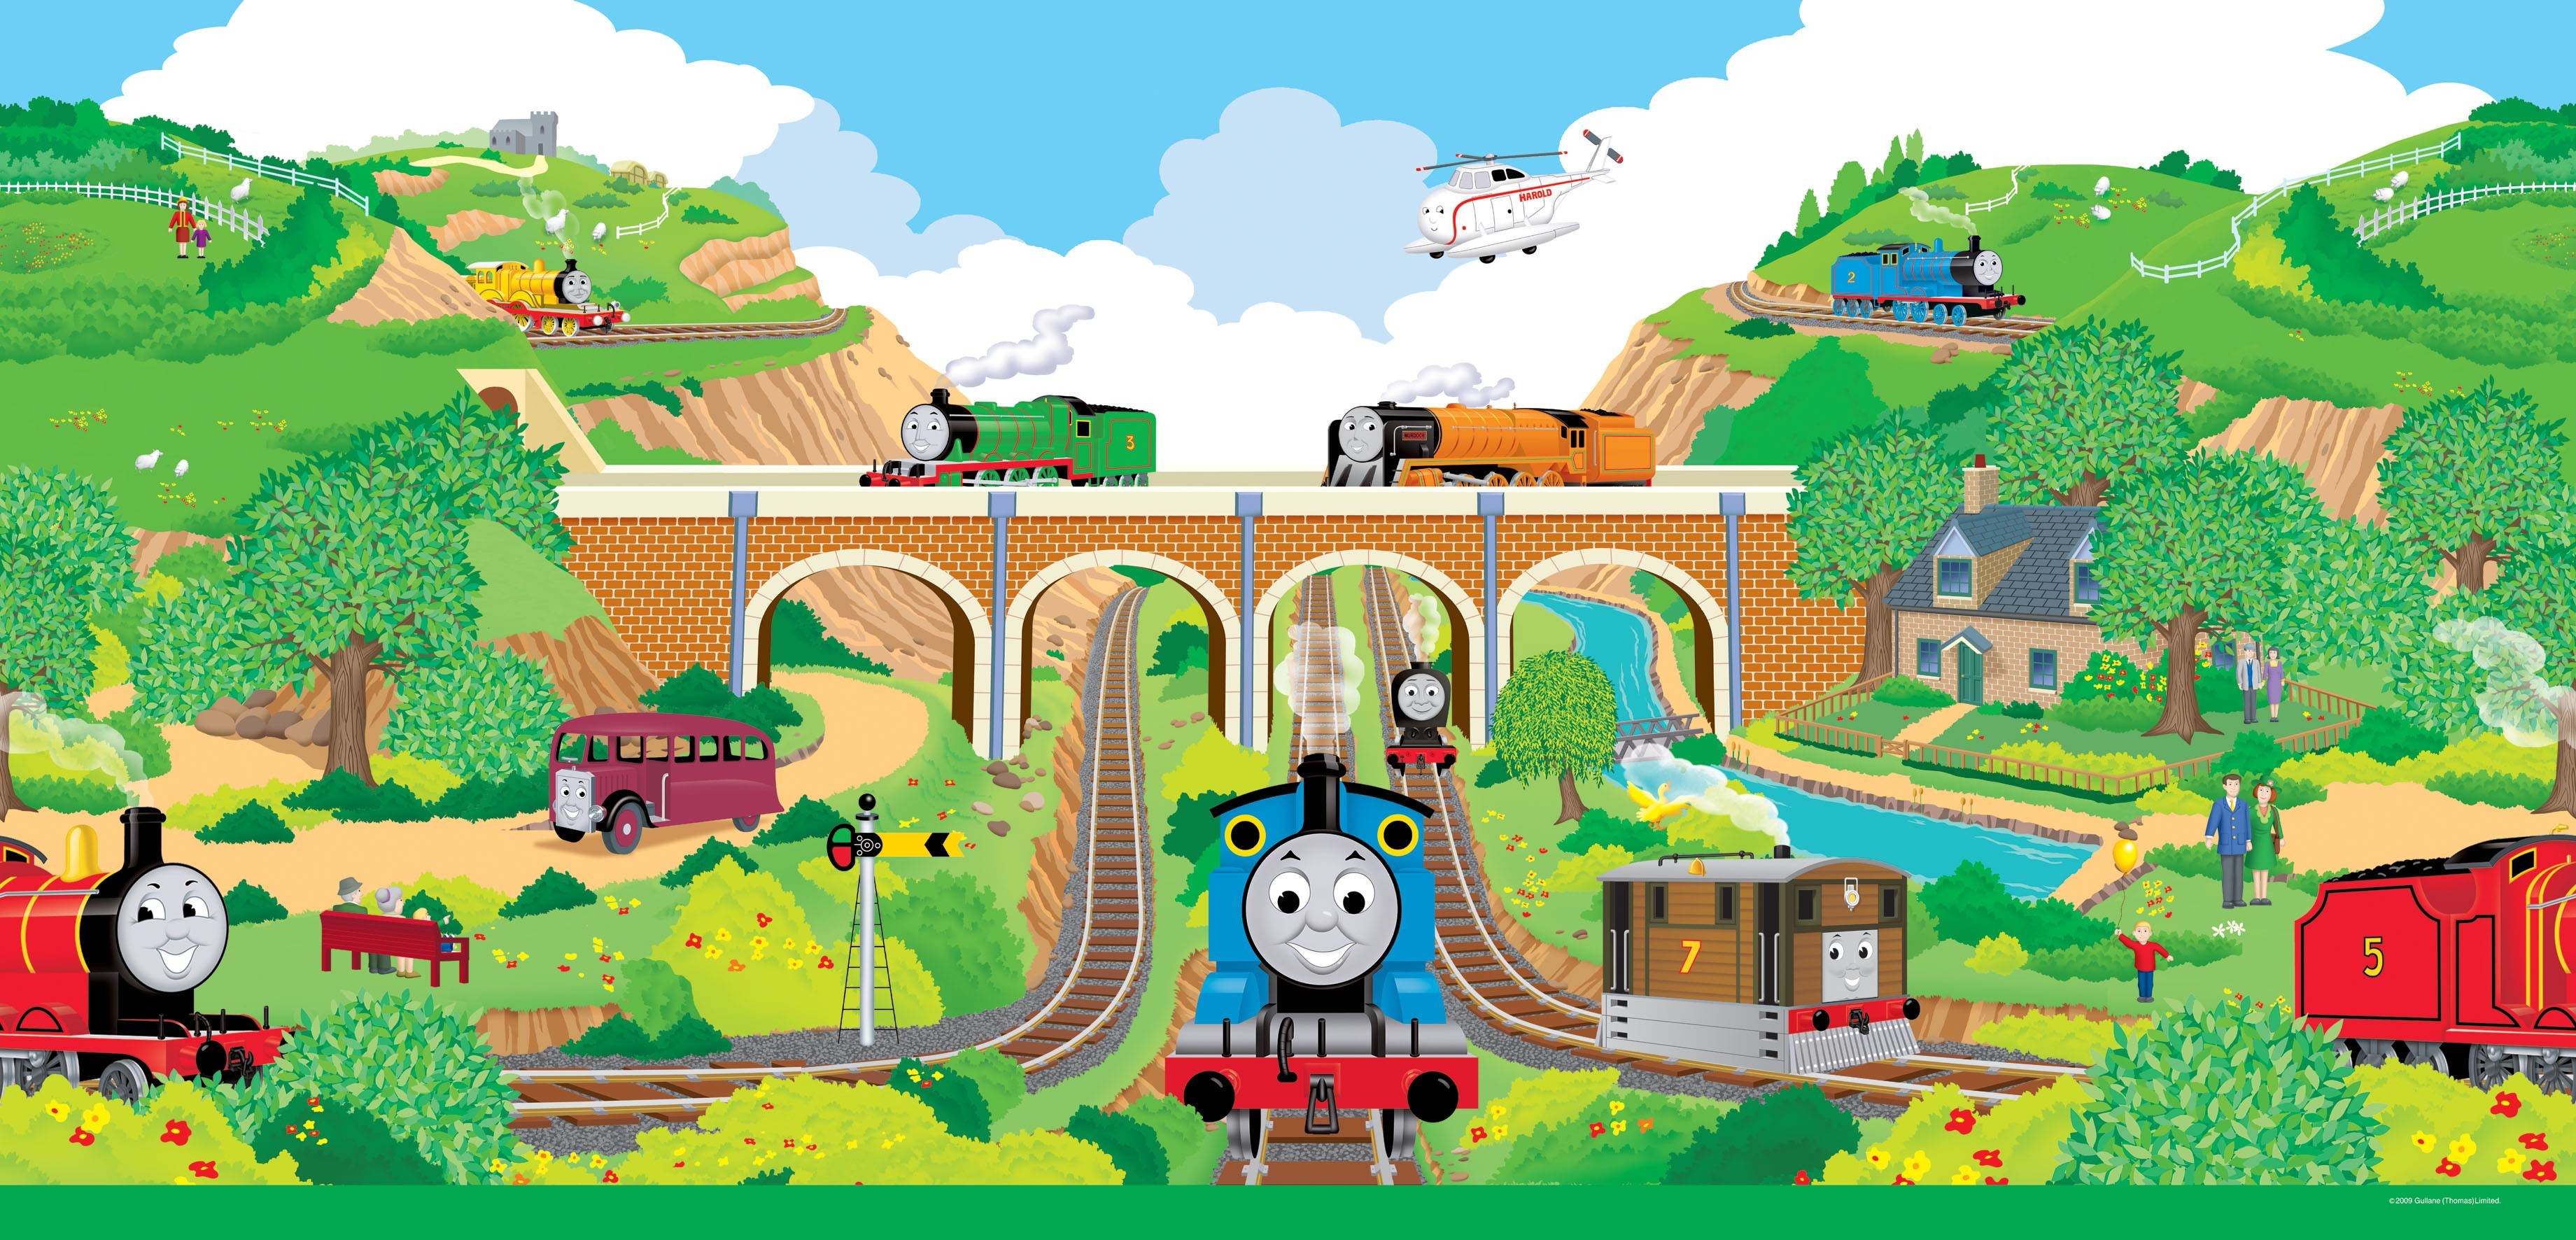 3681x1772 Thomas Train Wallpaper - WallpaperSafari